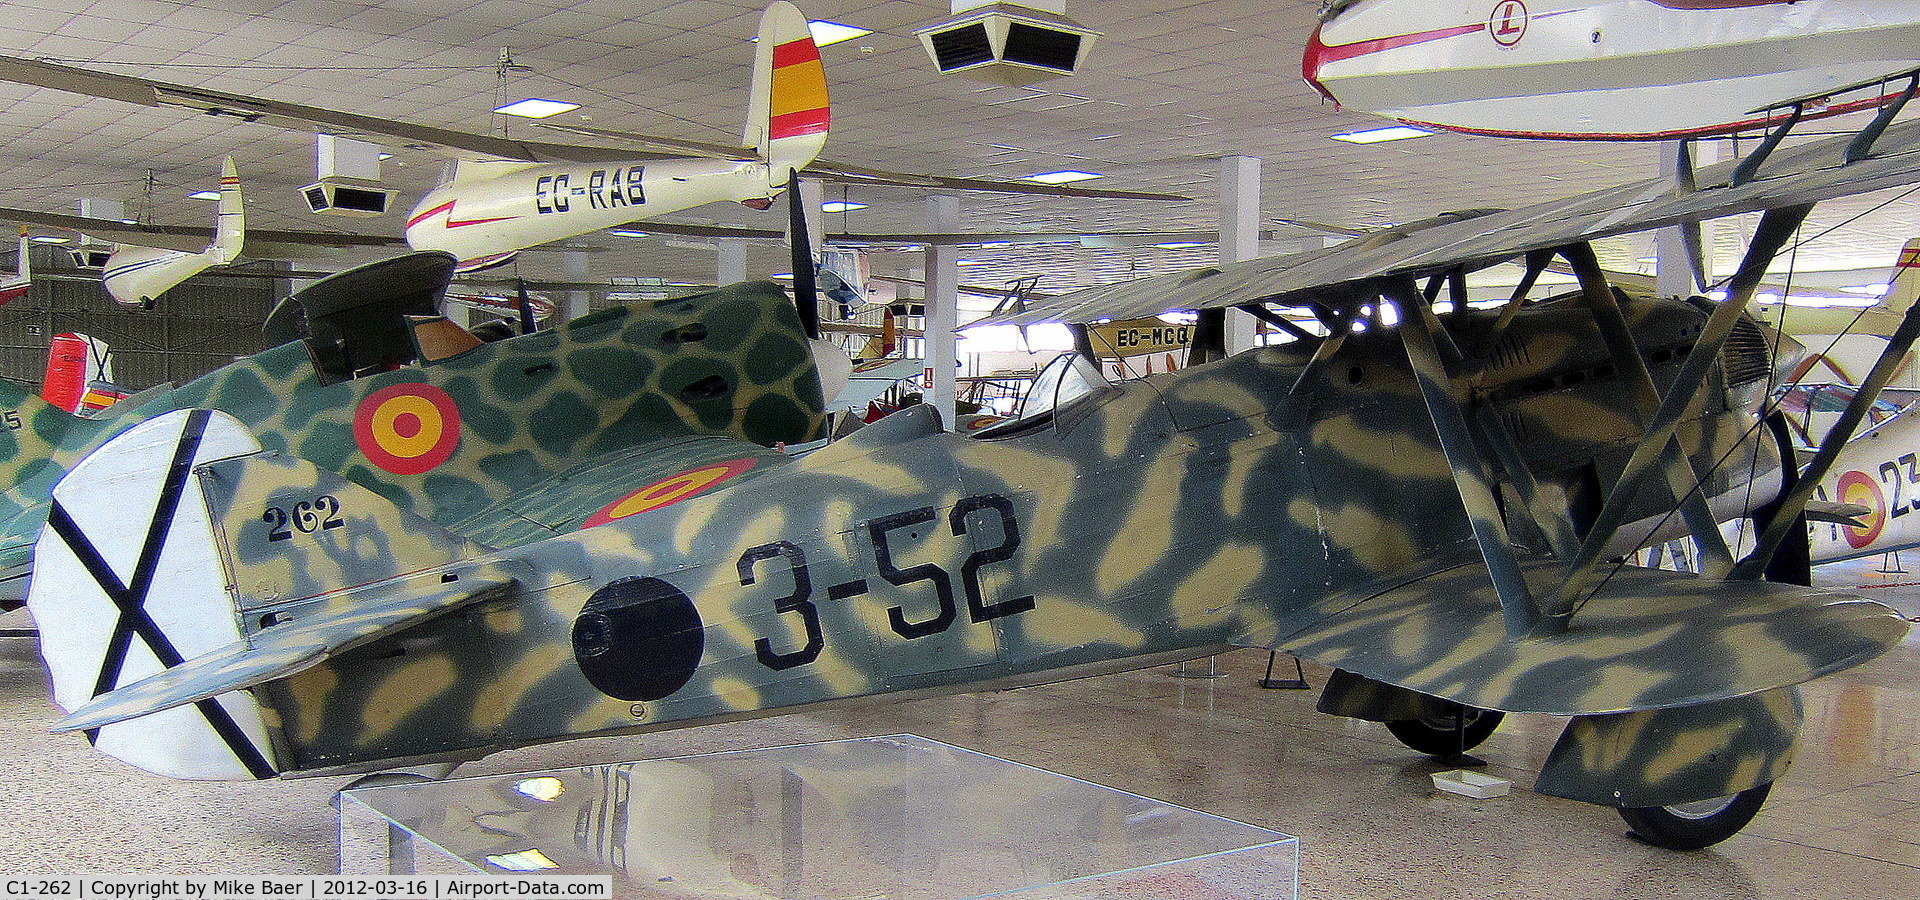 C1-262, Fiat CR-32 C/N 262, Fiat CR-32 @ Museo del Aire